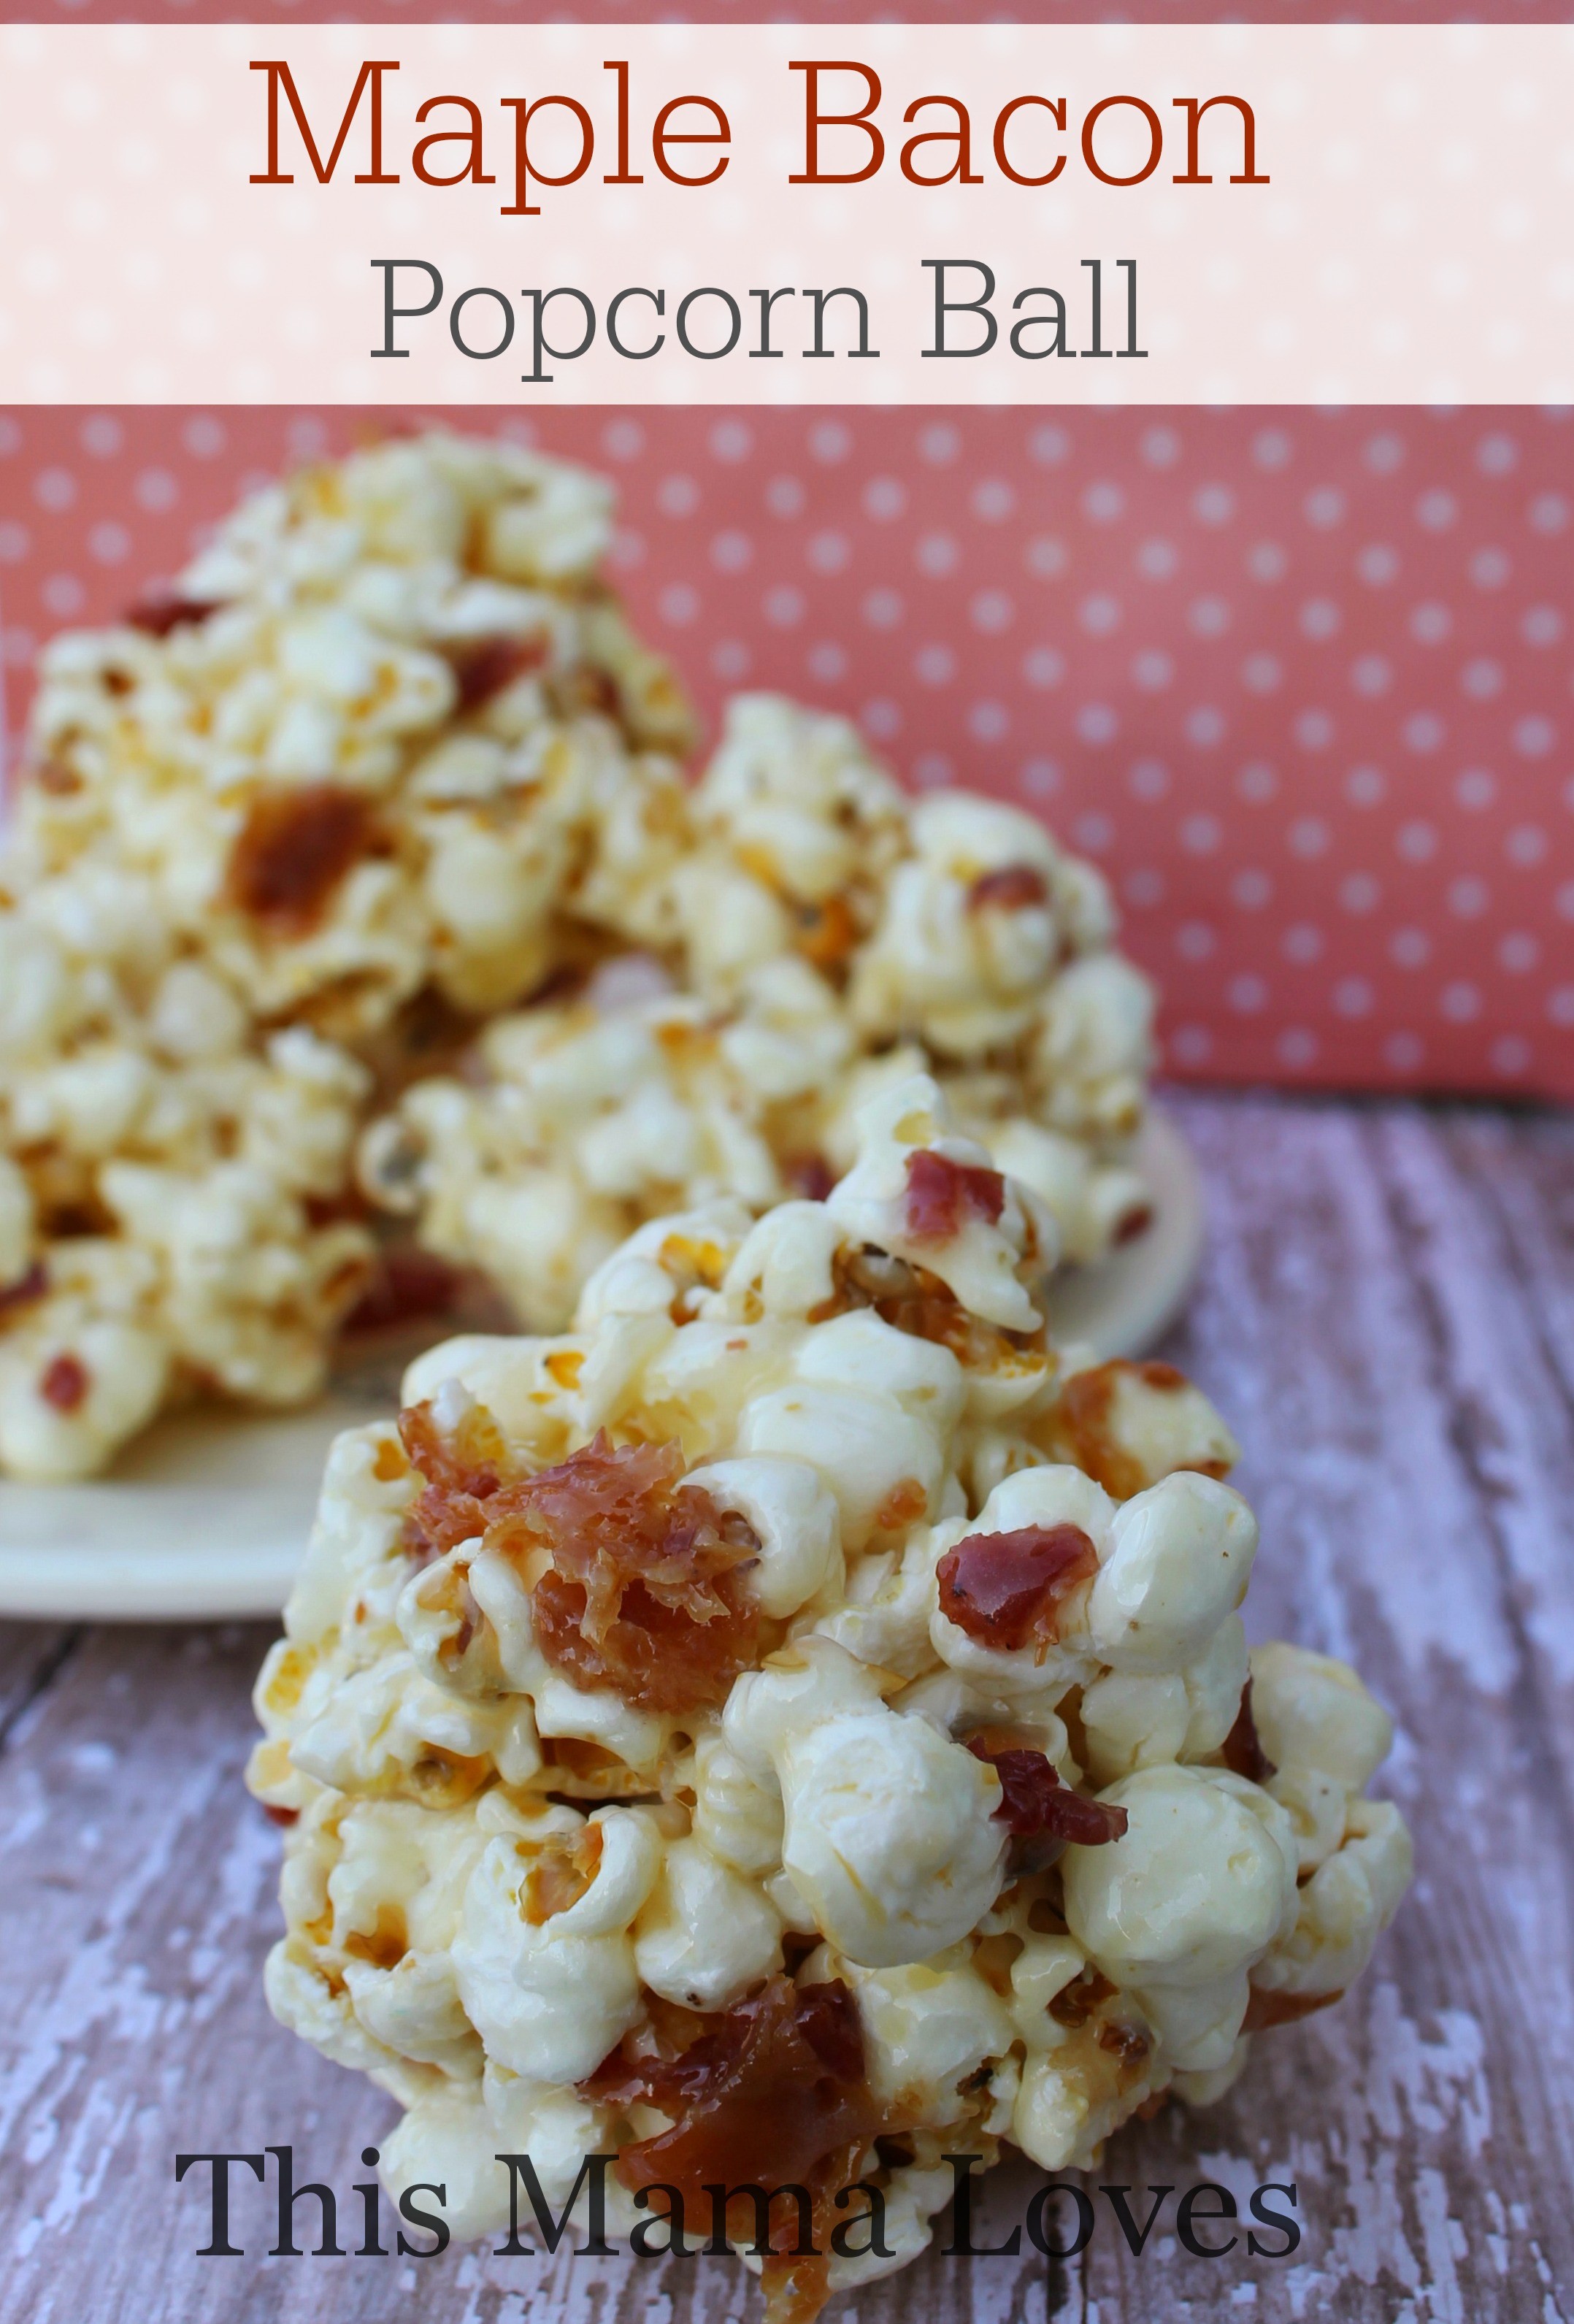 Maple Bacon Popcorn Ball Recipe - This Mama Loves